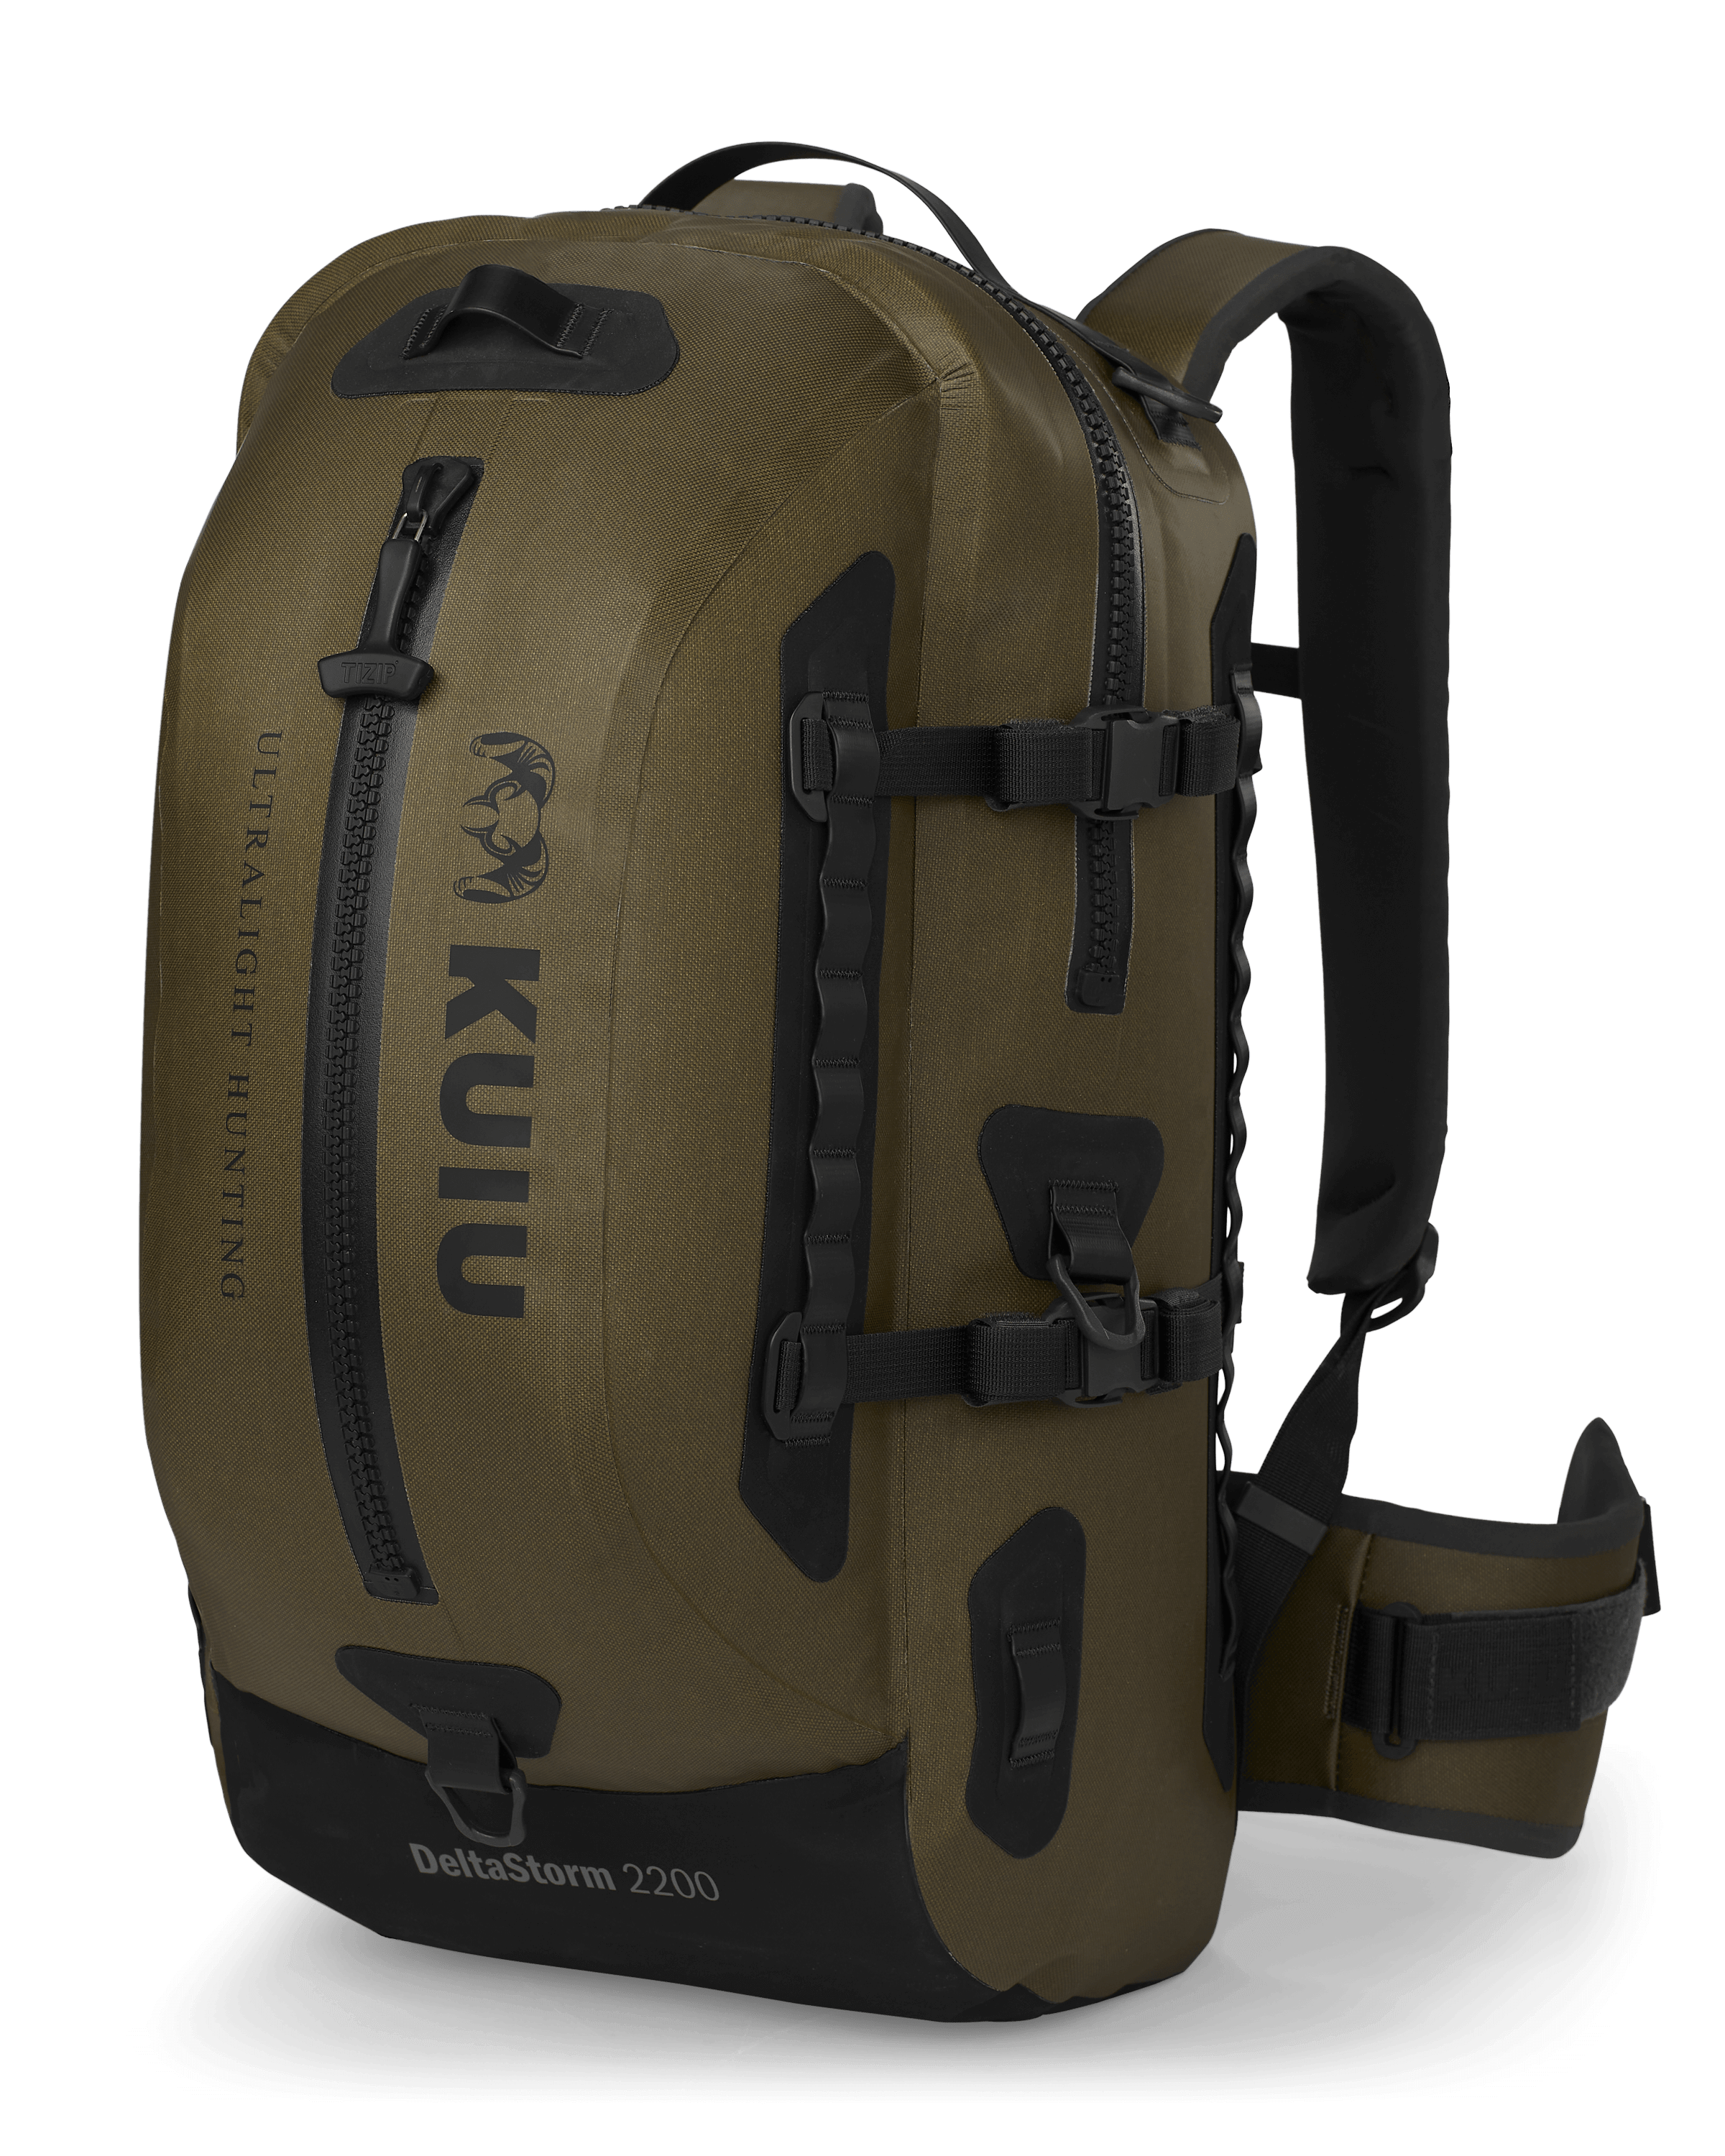 KUIU DeltaStorm 2200 Day Bag Pack Submersible Backpack in Coyote Brown Hunting Pack